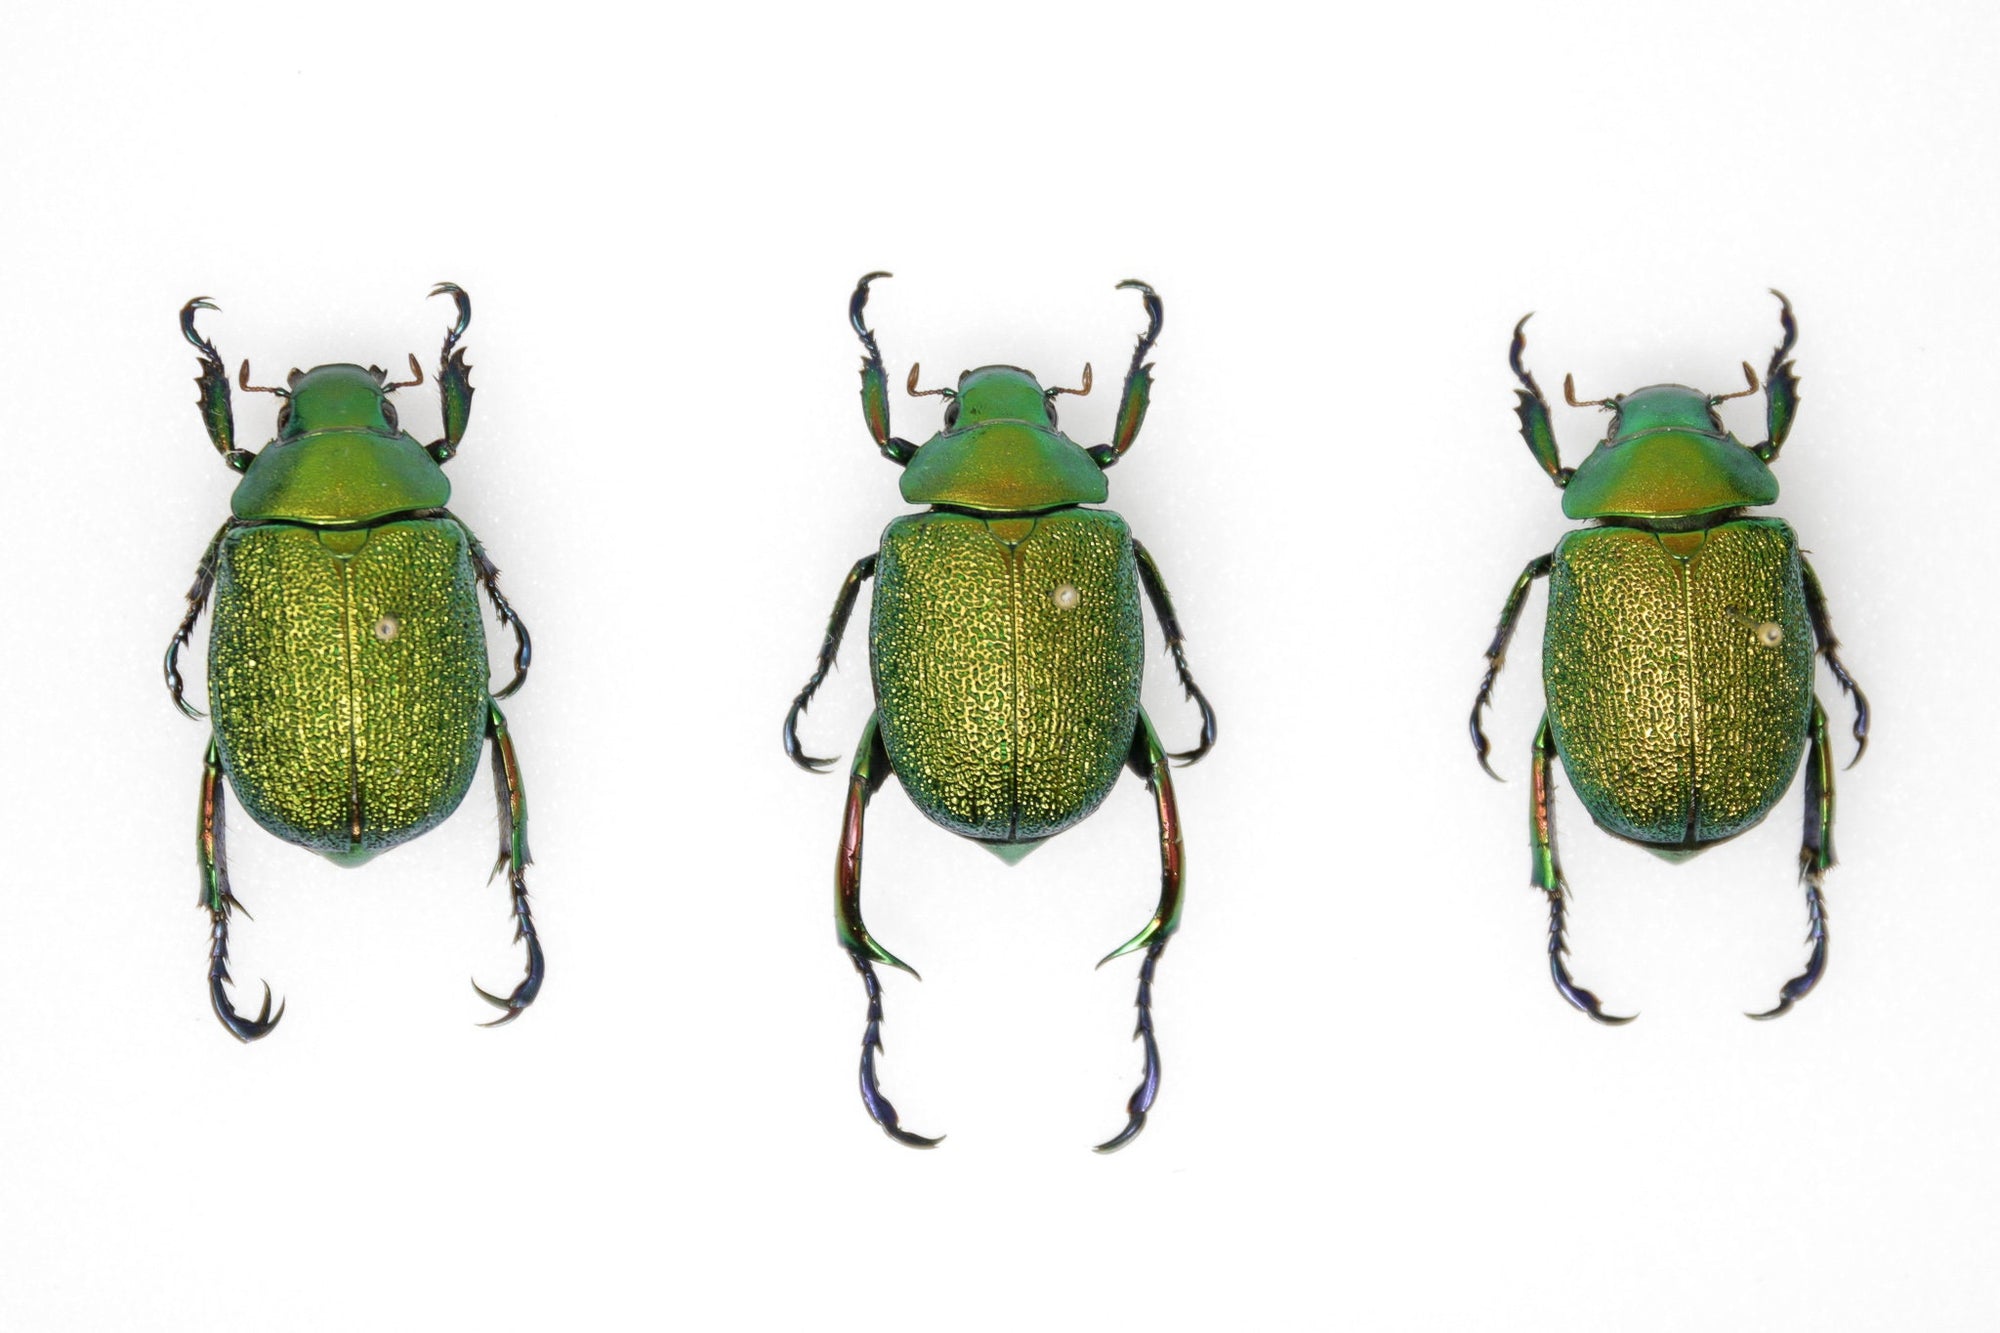 Metallic Green Beetle Collection (Chrysophora chrysochlora) Inc. Scientific Collection Data, A1 Quality, Entomology (#12)